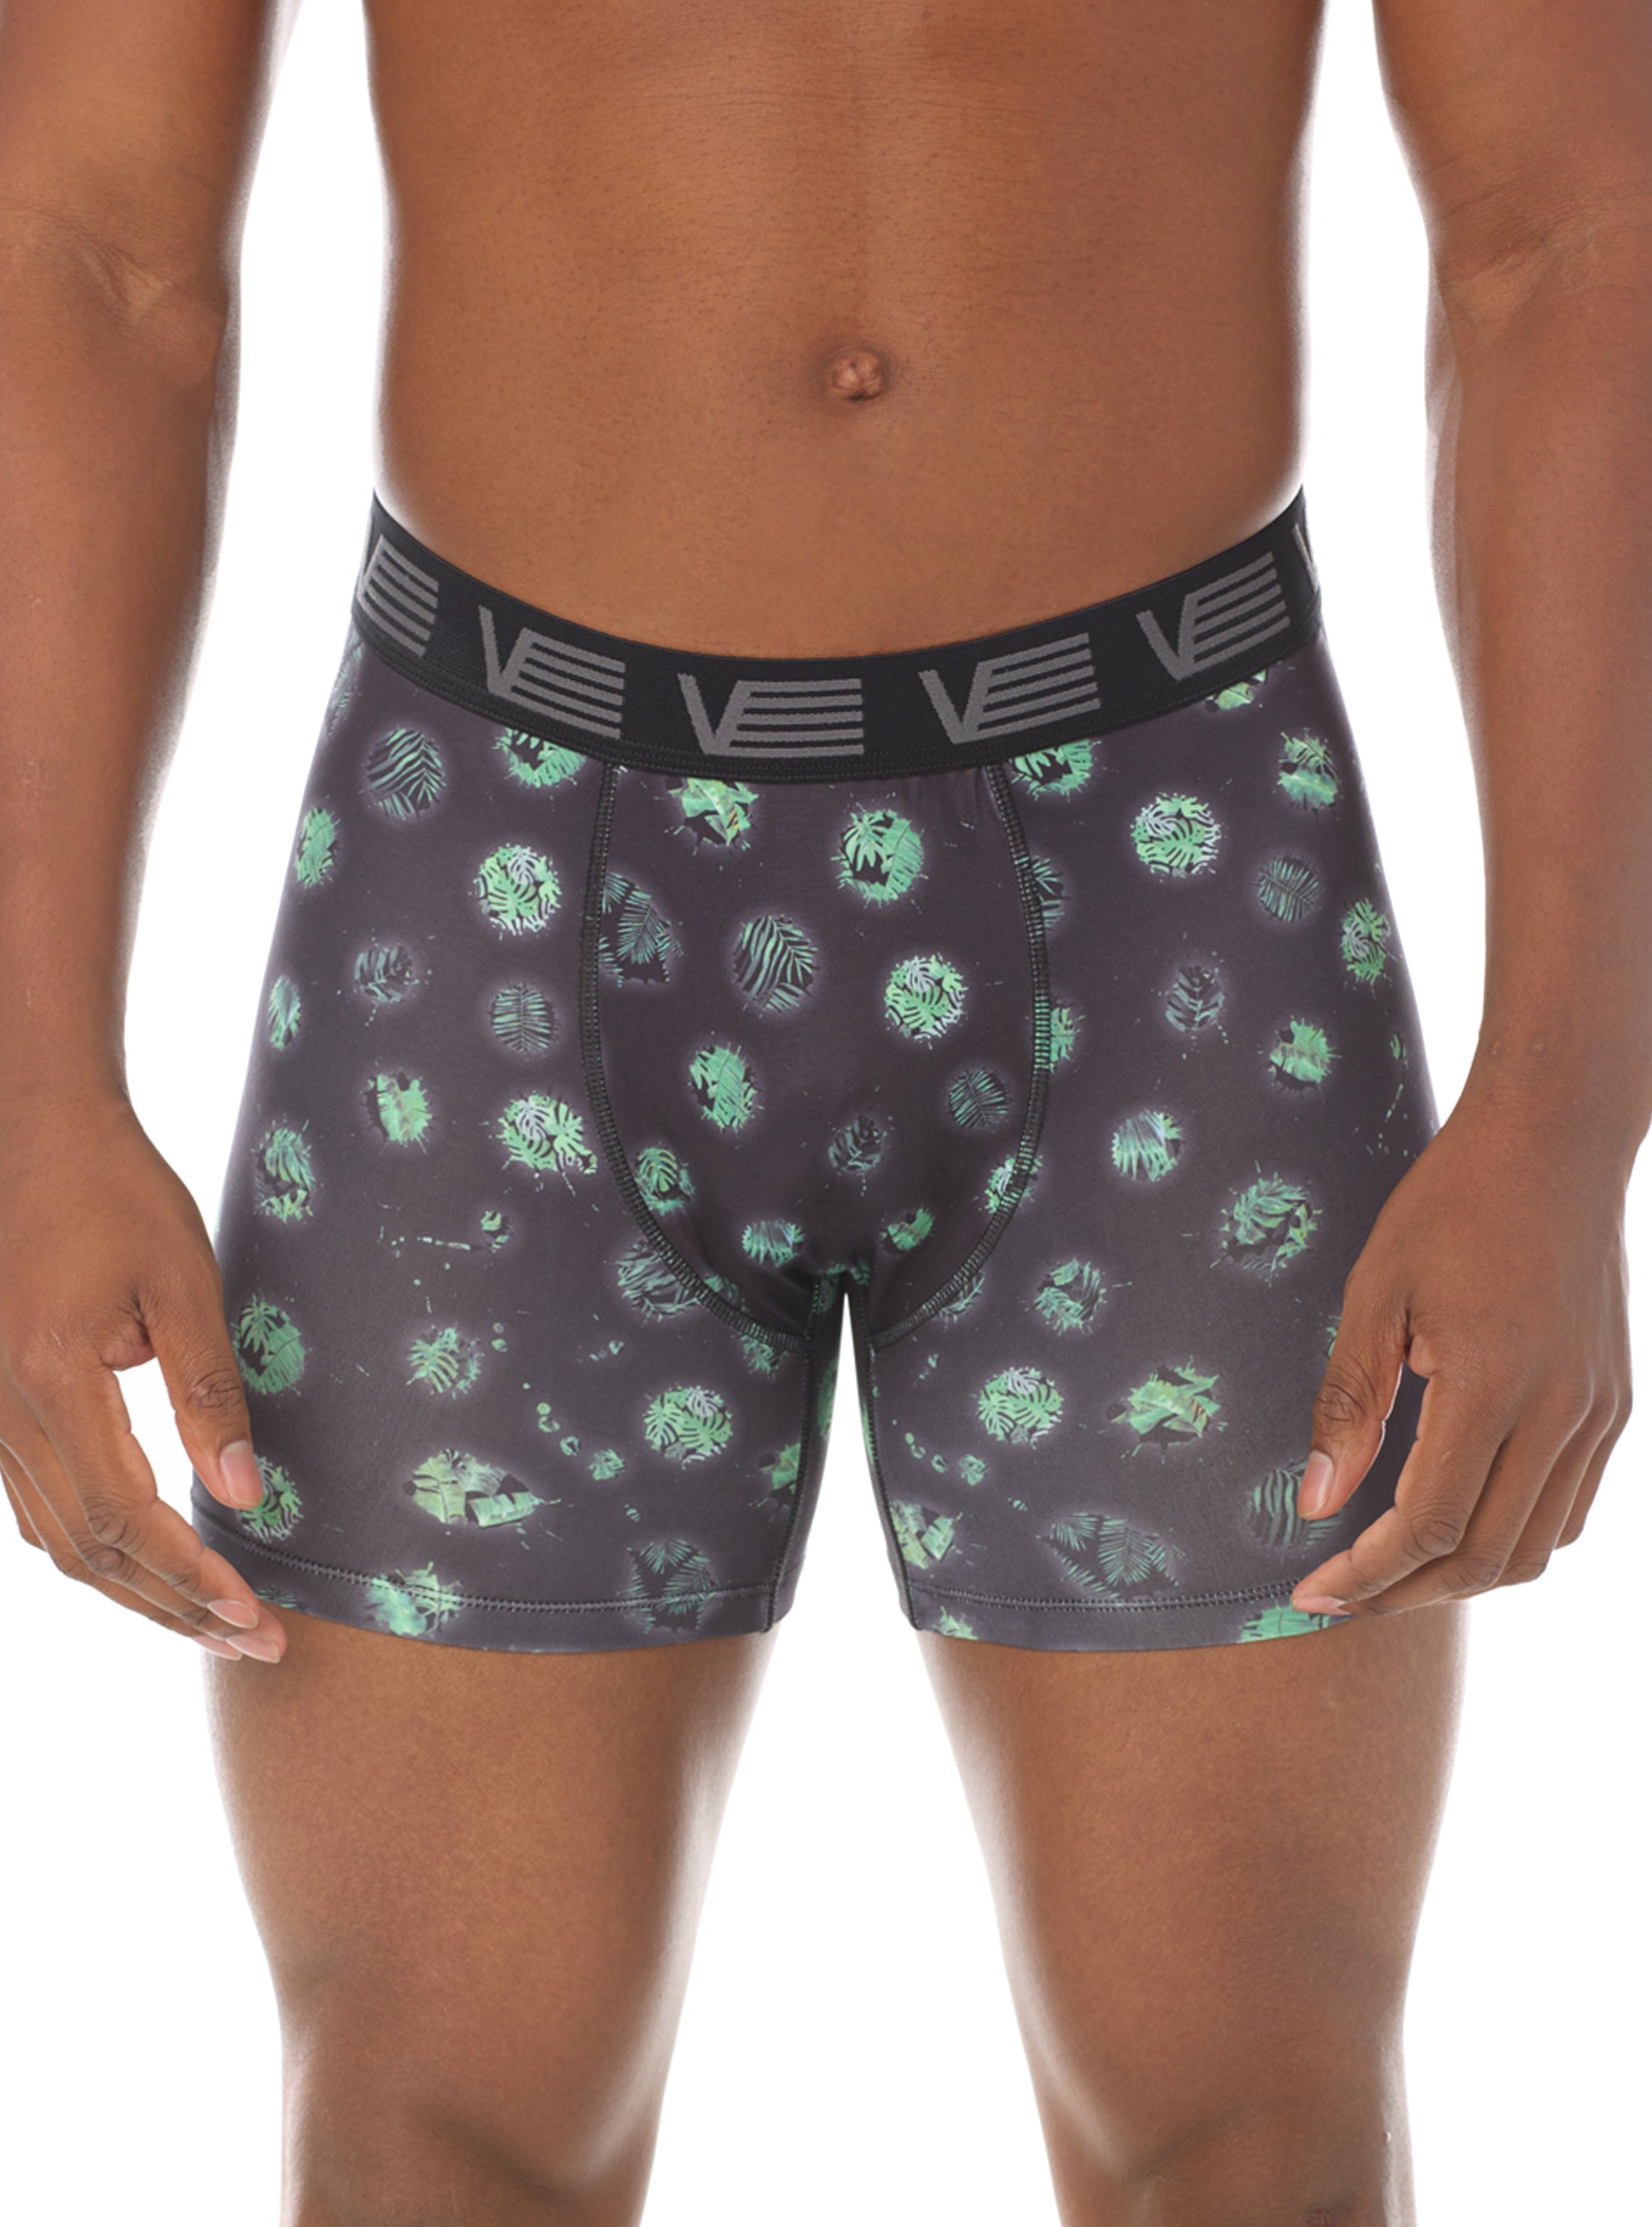 Men's boxer shorts with plant pattern print